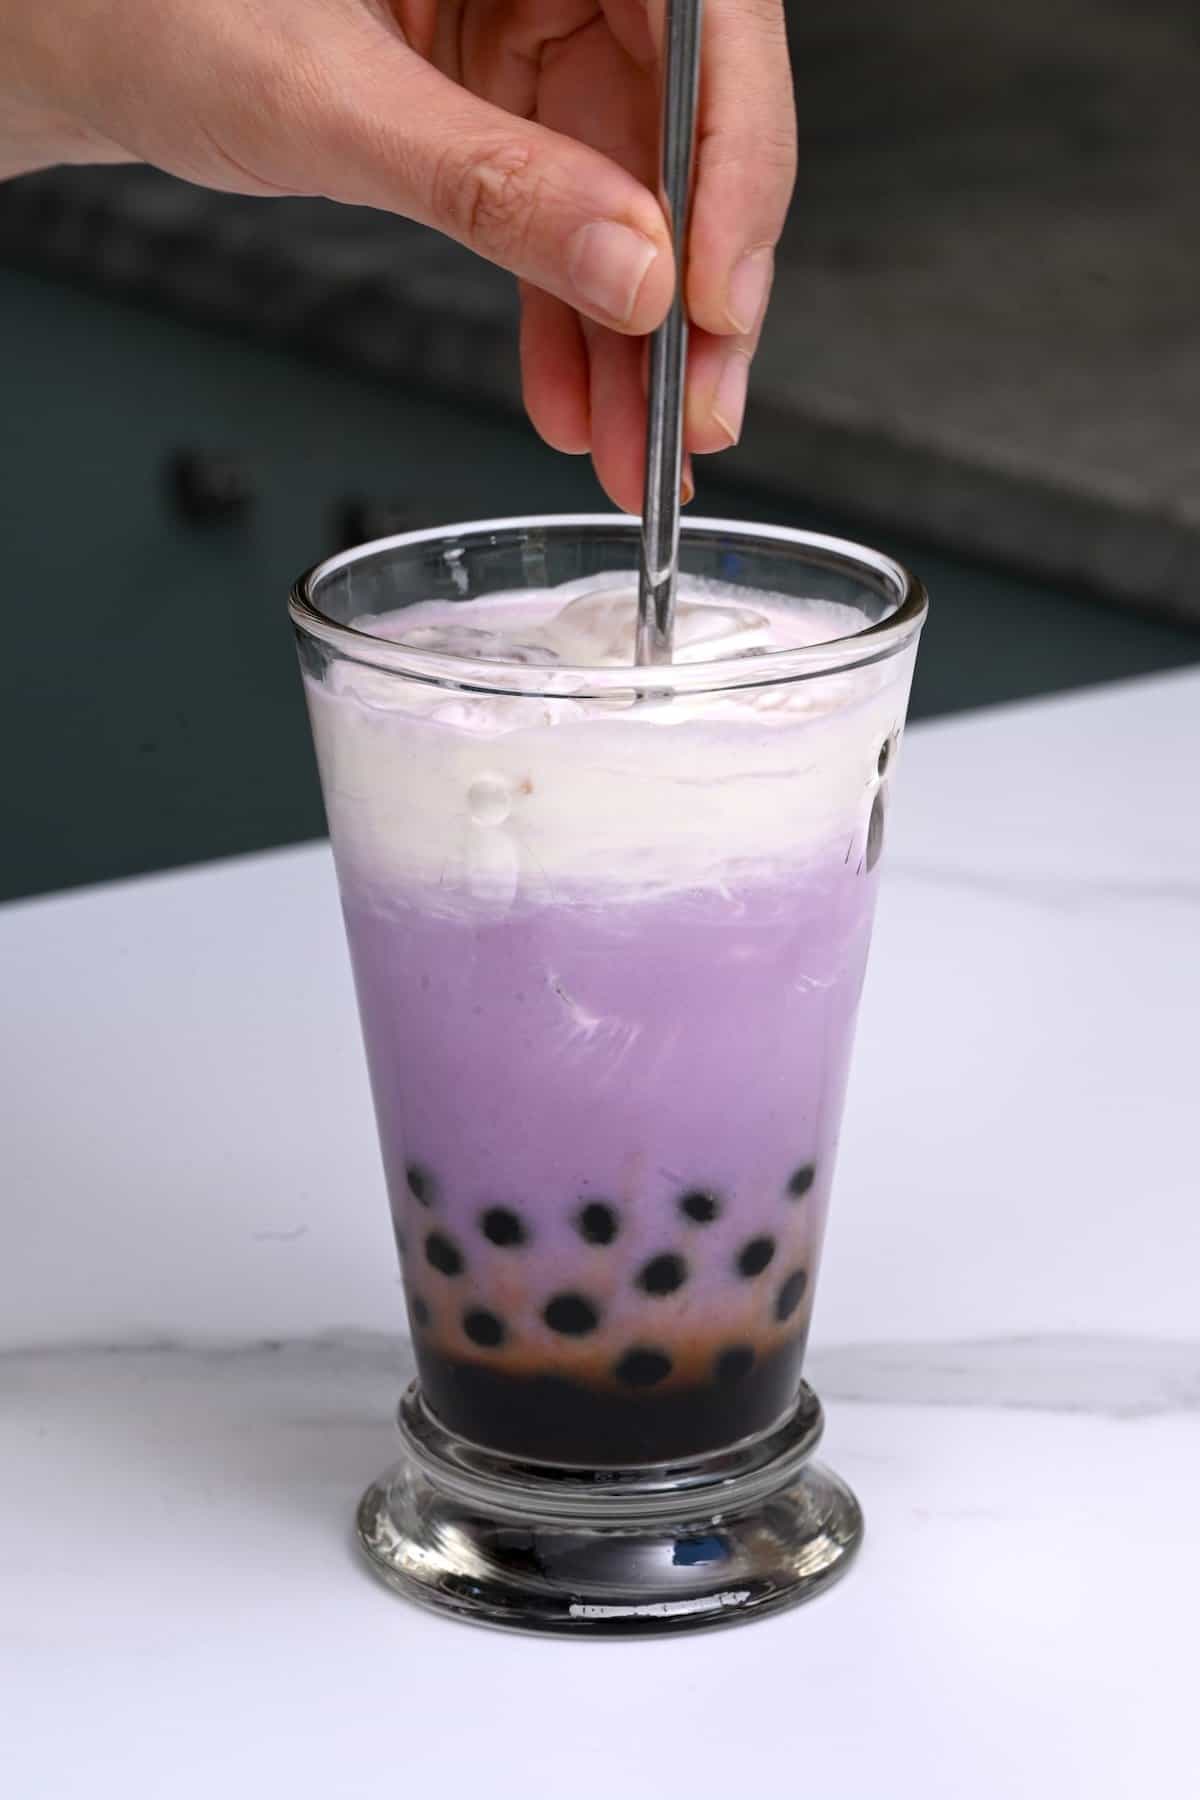 Taro Milk Bubble Tea with Real Taro or Powder